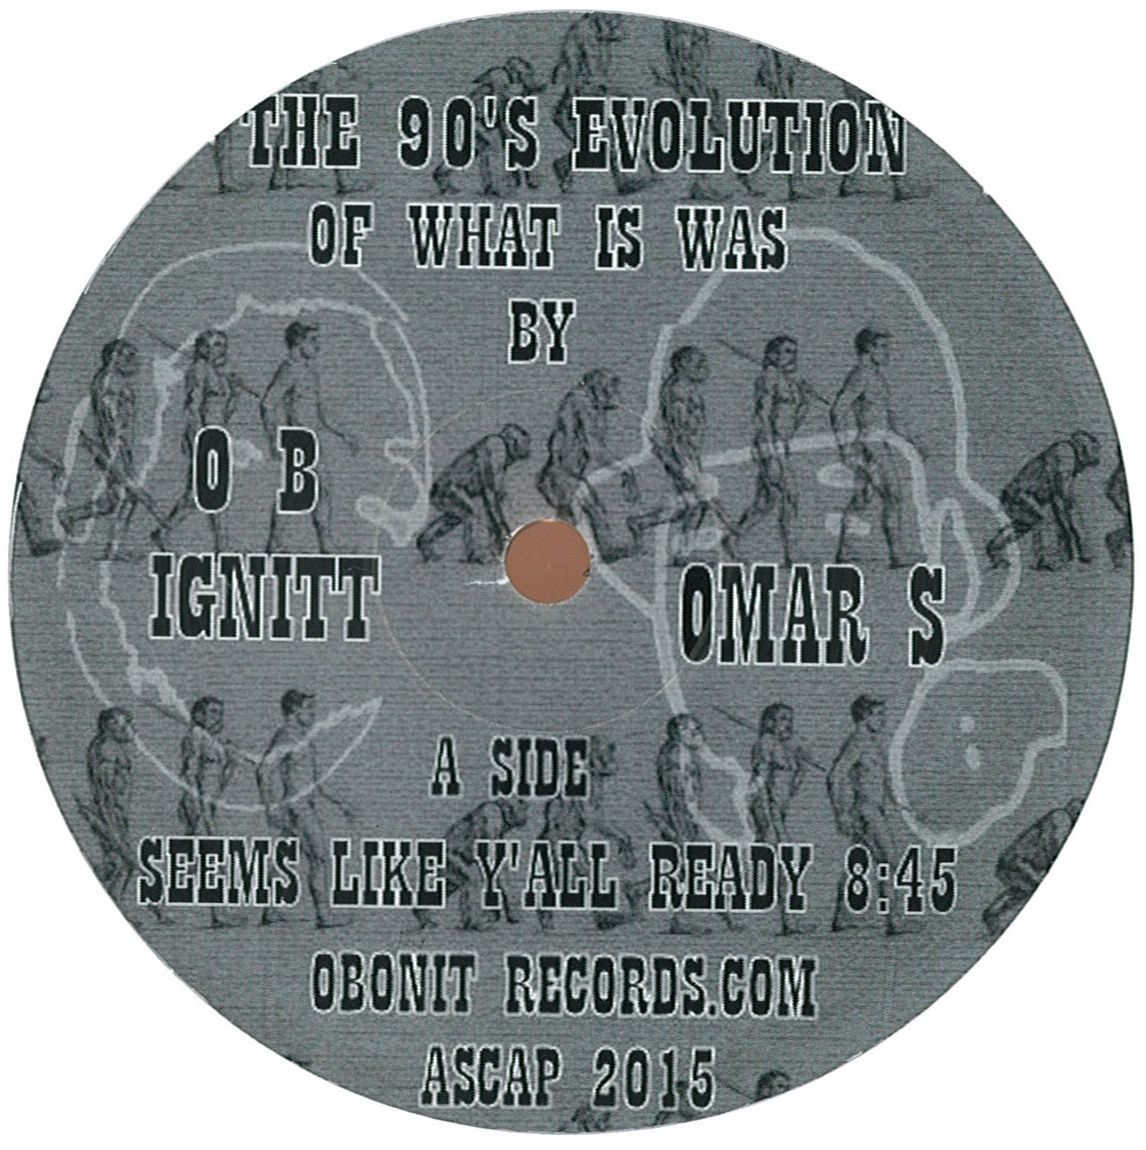 OB IGNITT & Omar-S – The 90’s Evolution Of What Is Was